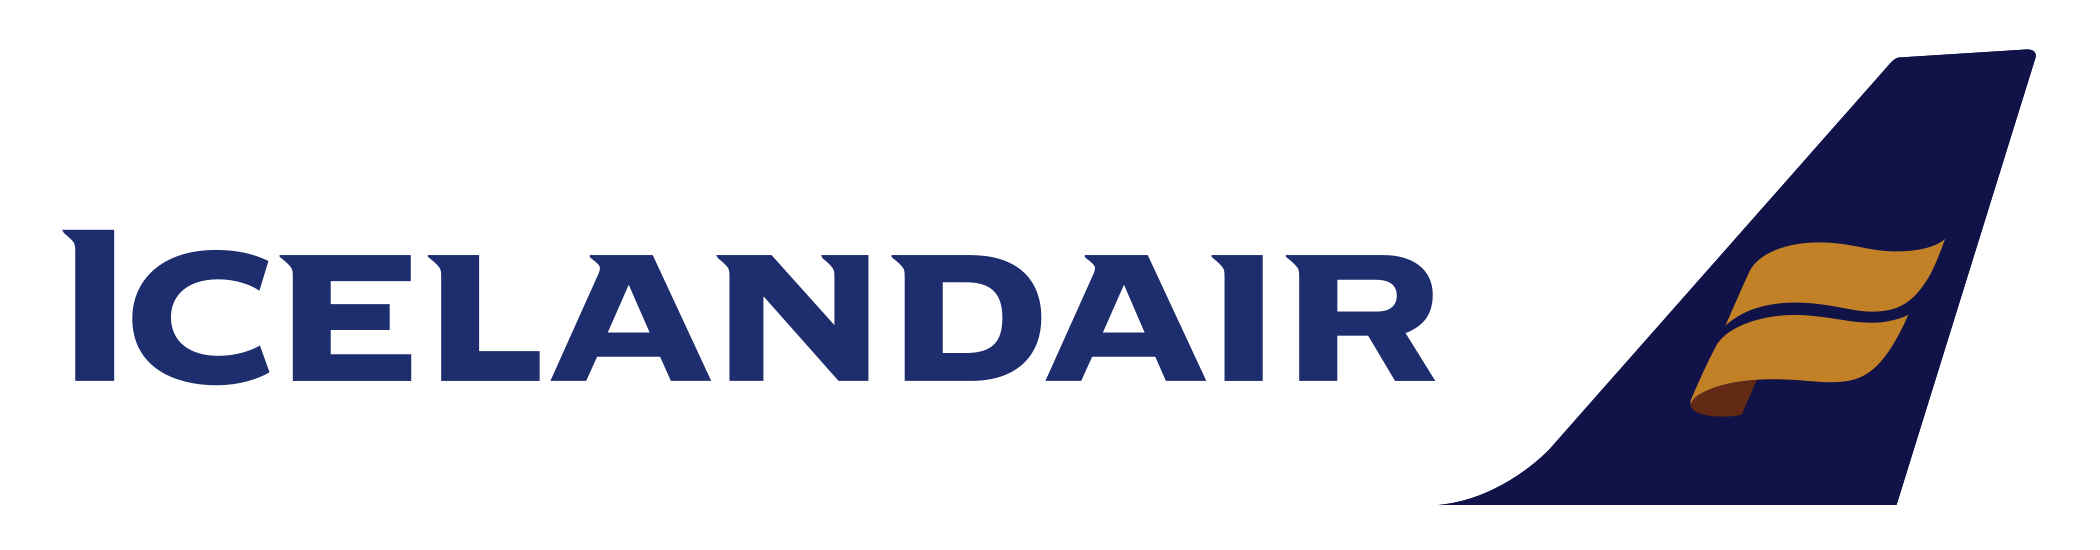 Icelandair_logo copy